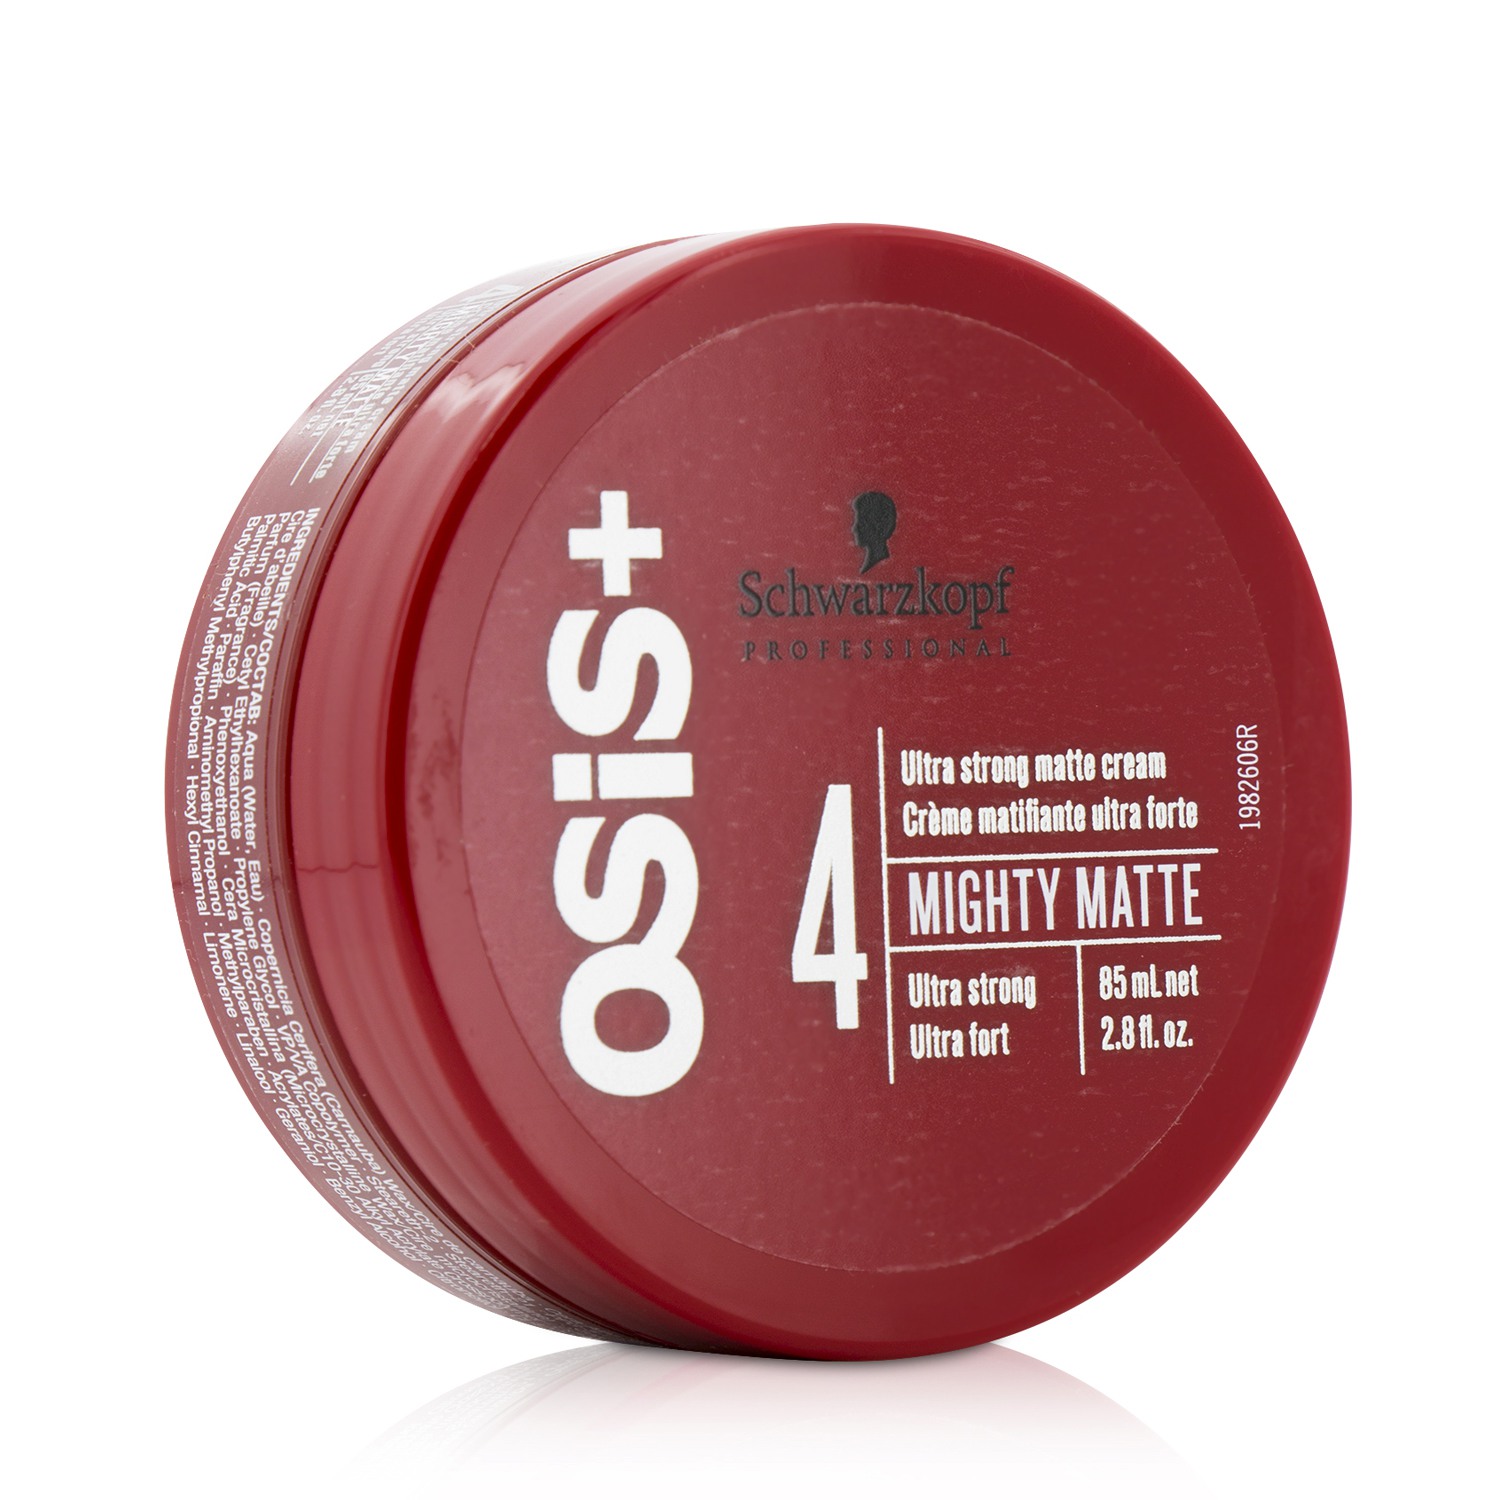 Osis+ Mighty Matte Ultra Strong Matte Cream (Ultra Strong) Schwarzkopf Image